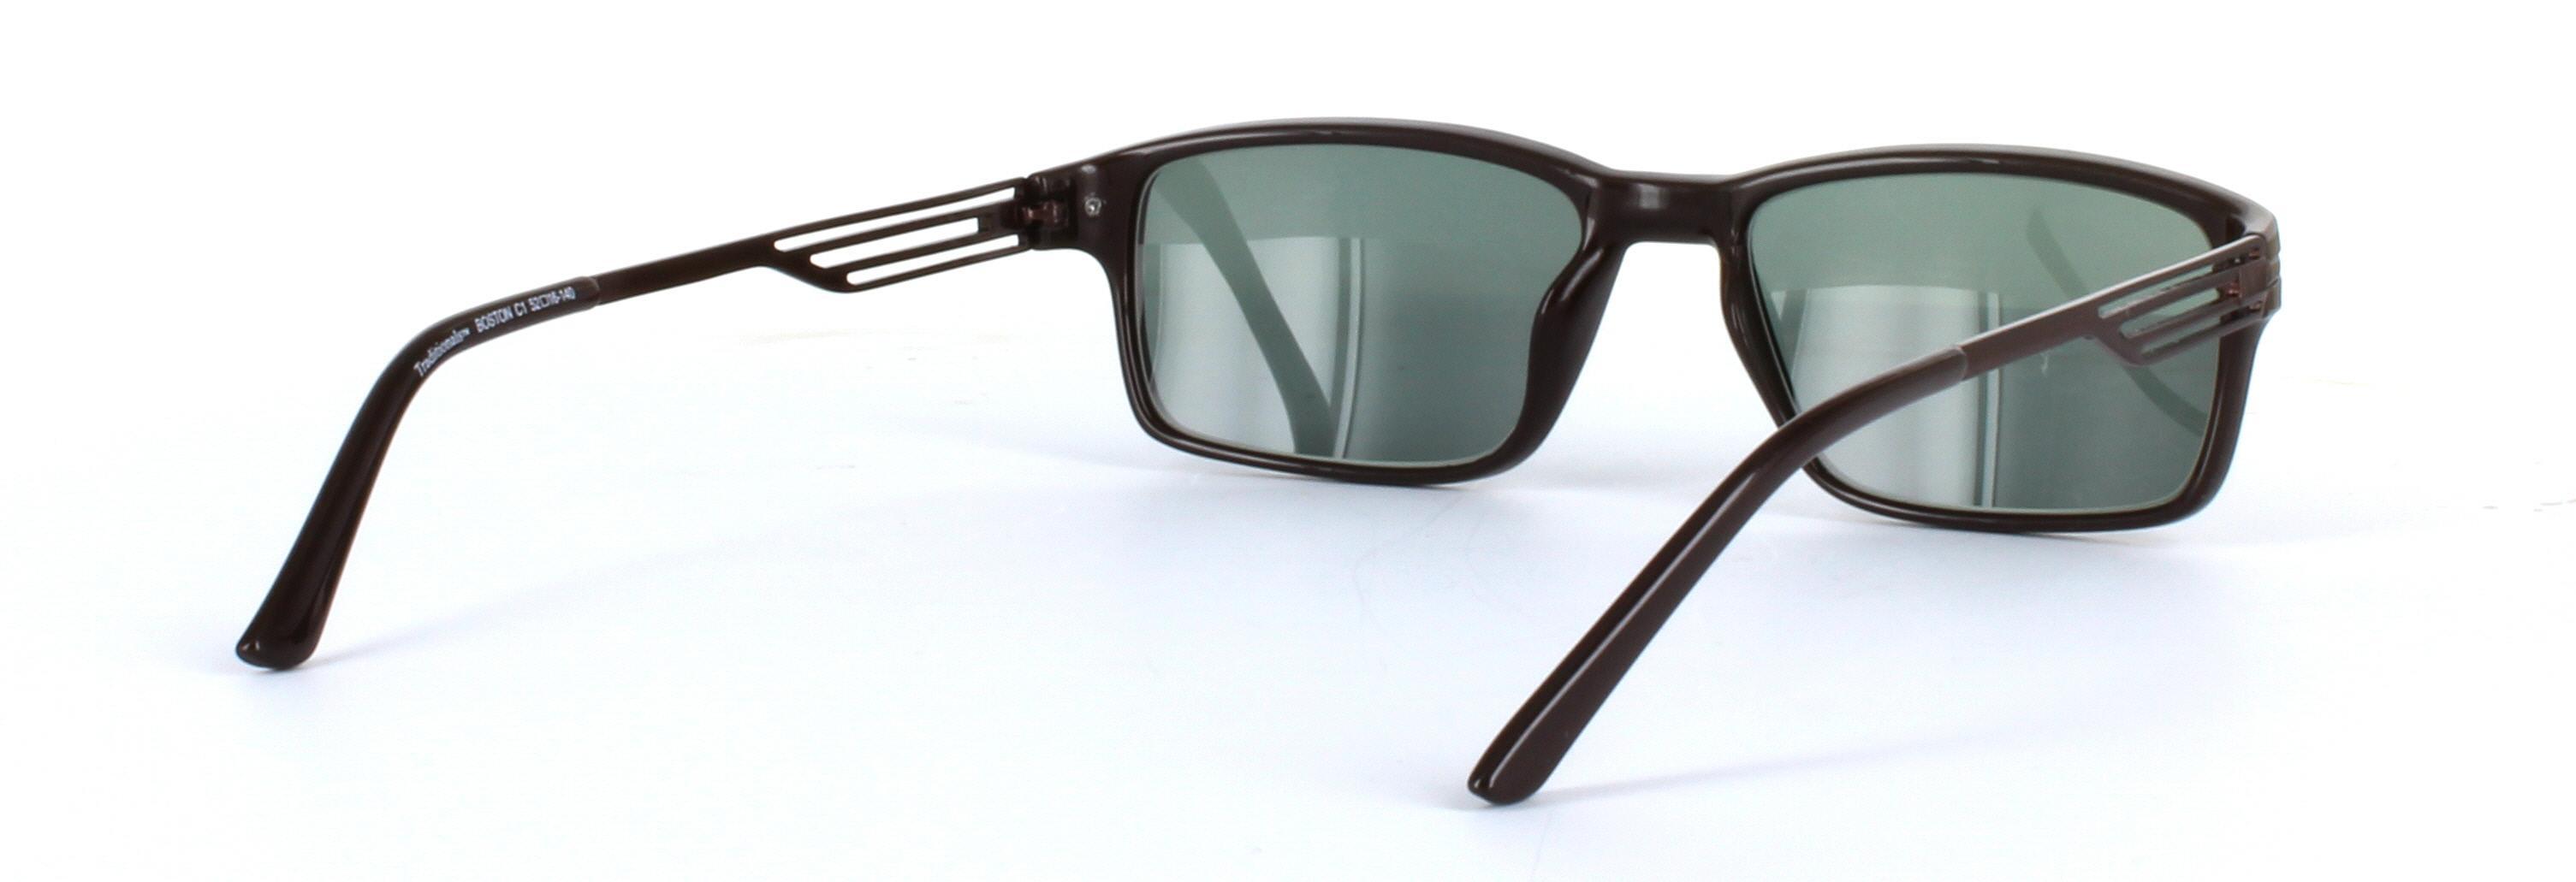 Boston Brown Full Rim Rectangular Plastic Sunglasses - Image View 4